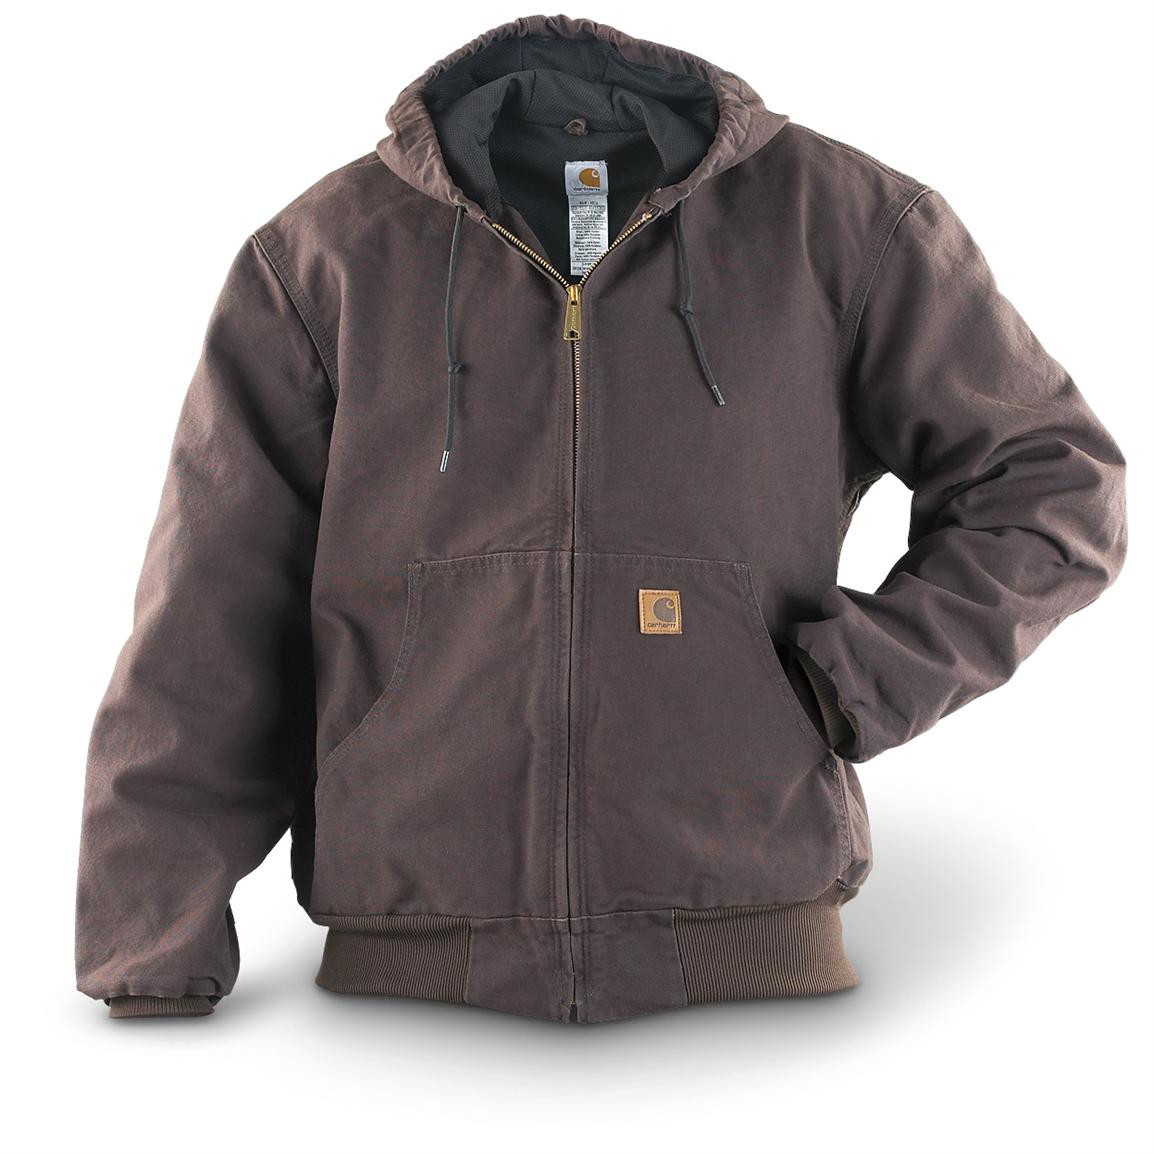 Carhartt® Soft Duck Active Jacket - 153625, Insulated Jackets & Coats ...